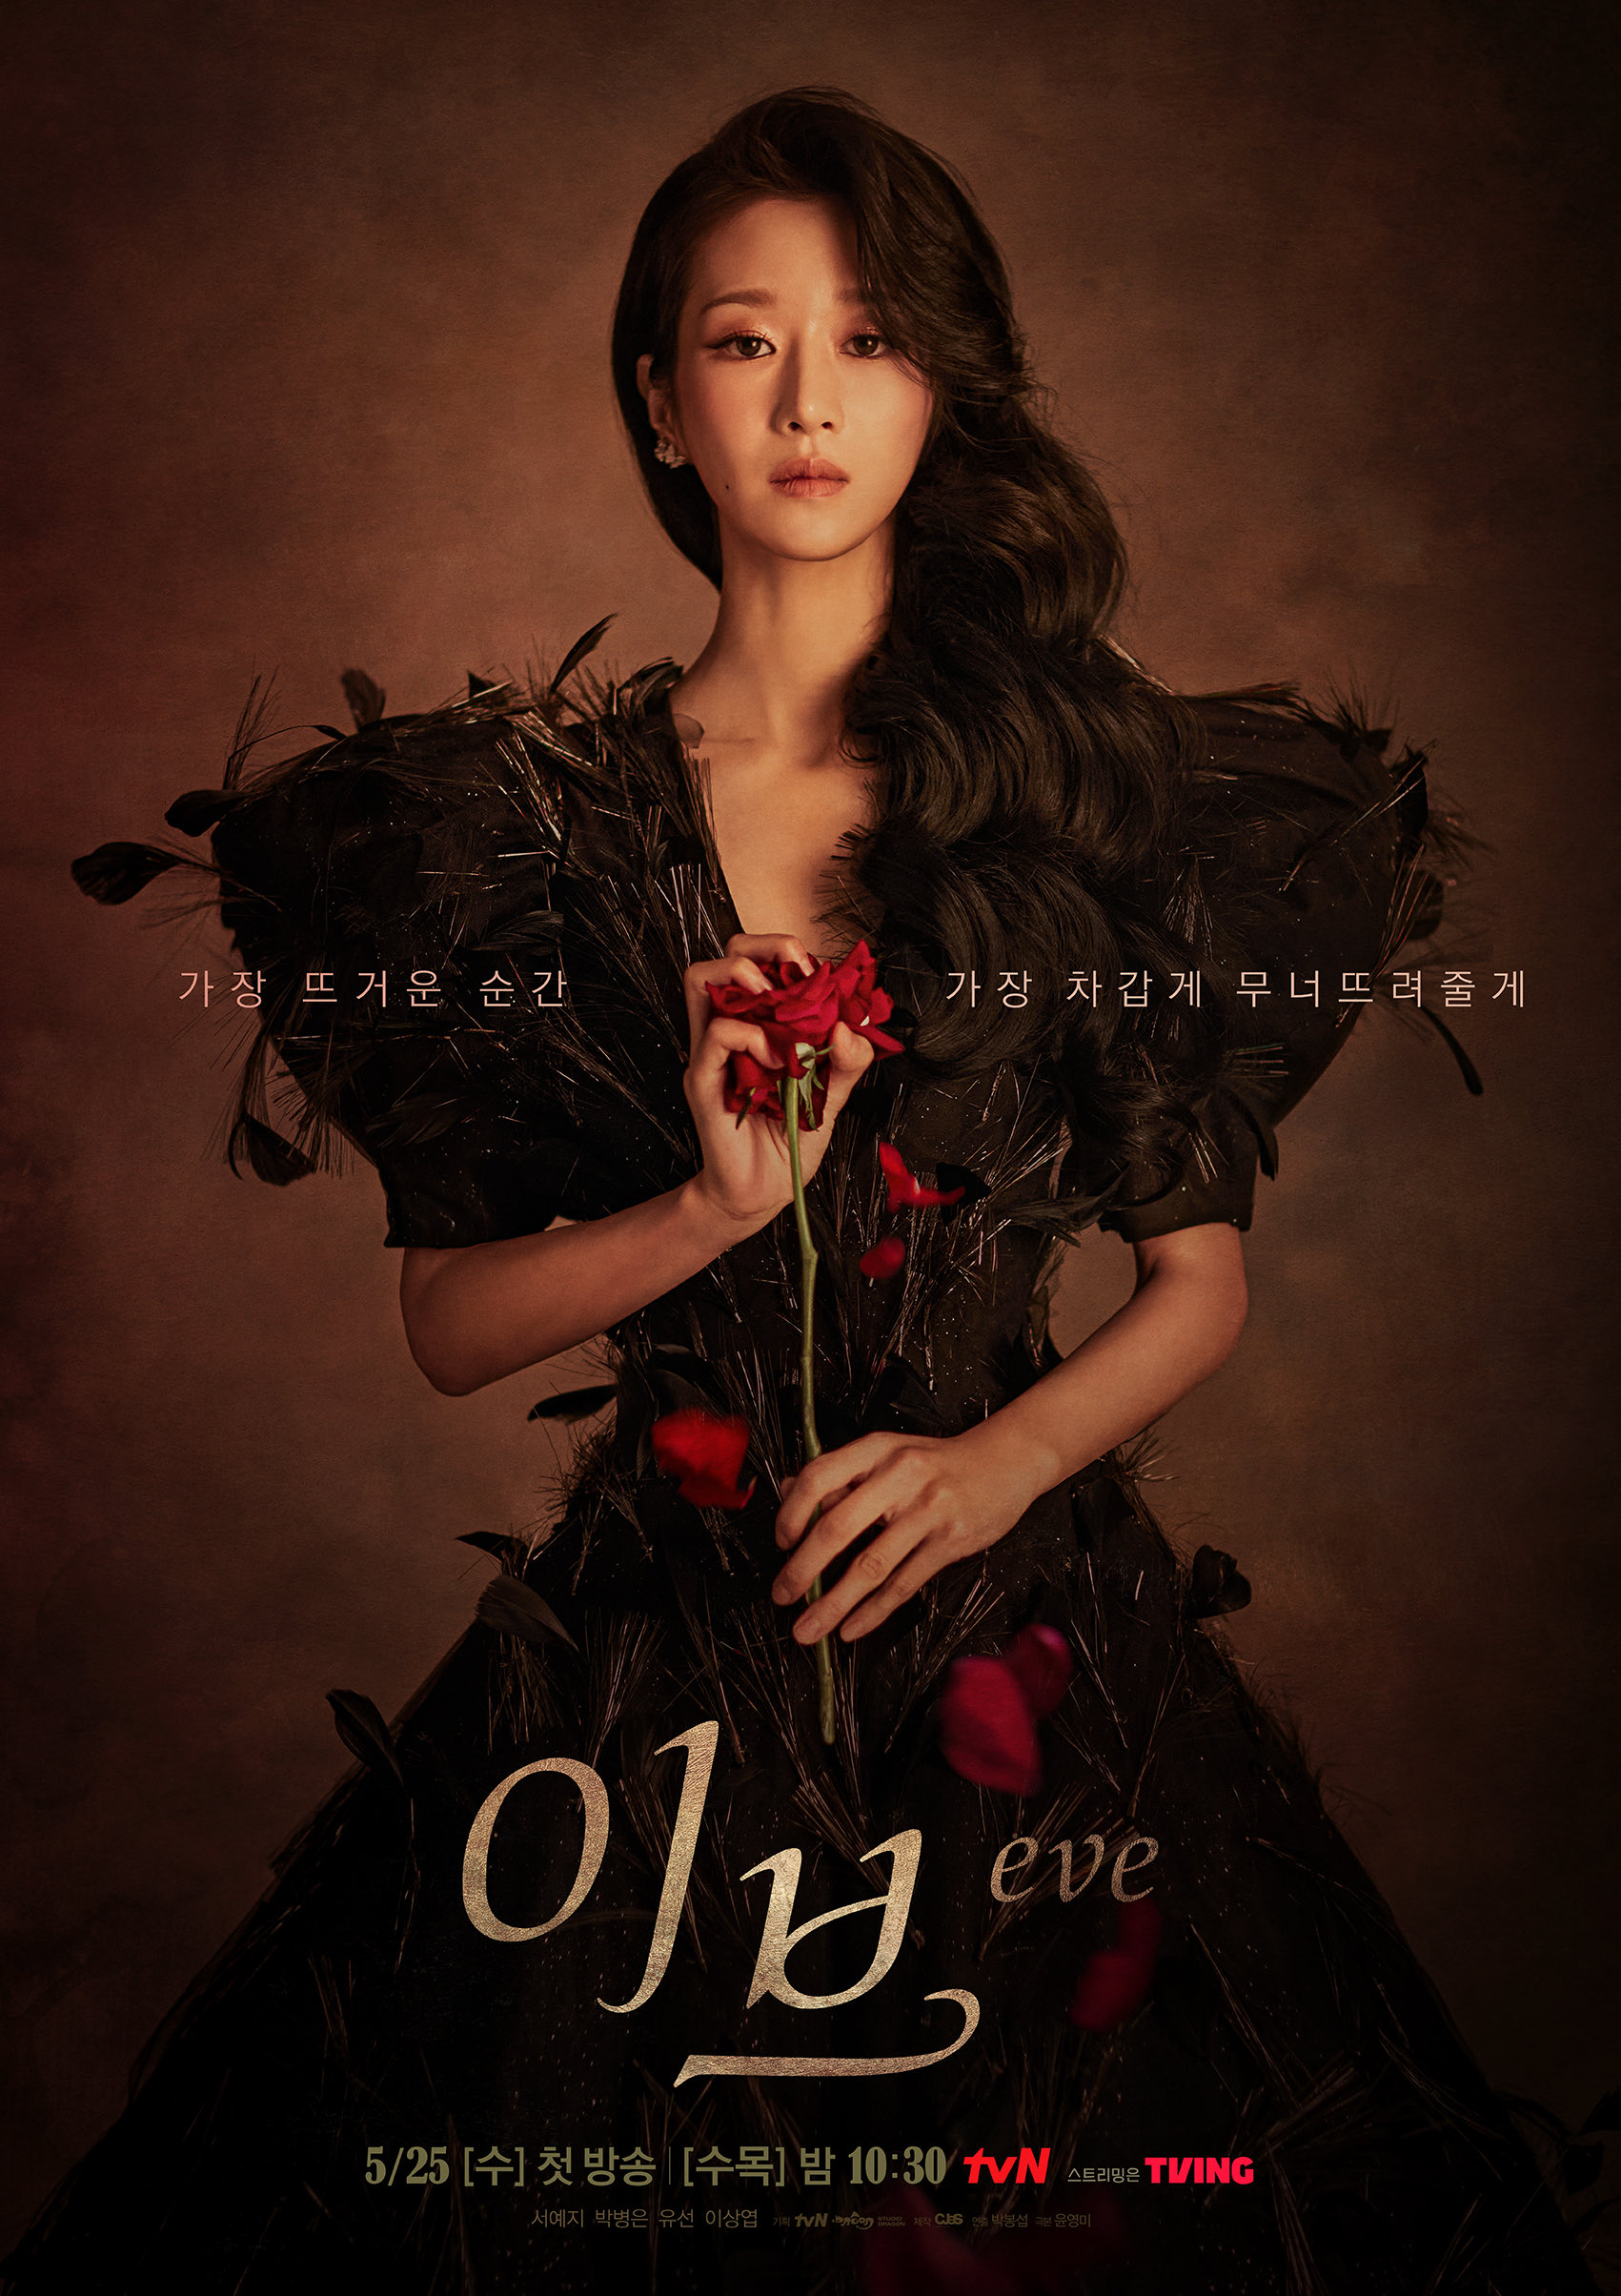 Seo Ye Ji: The Korean phenomenon flower collapsed overnight because of the manipulation of the actor 